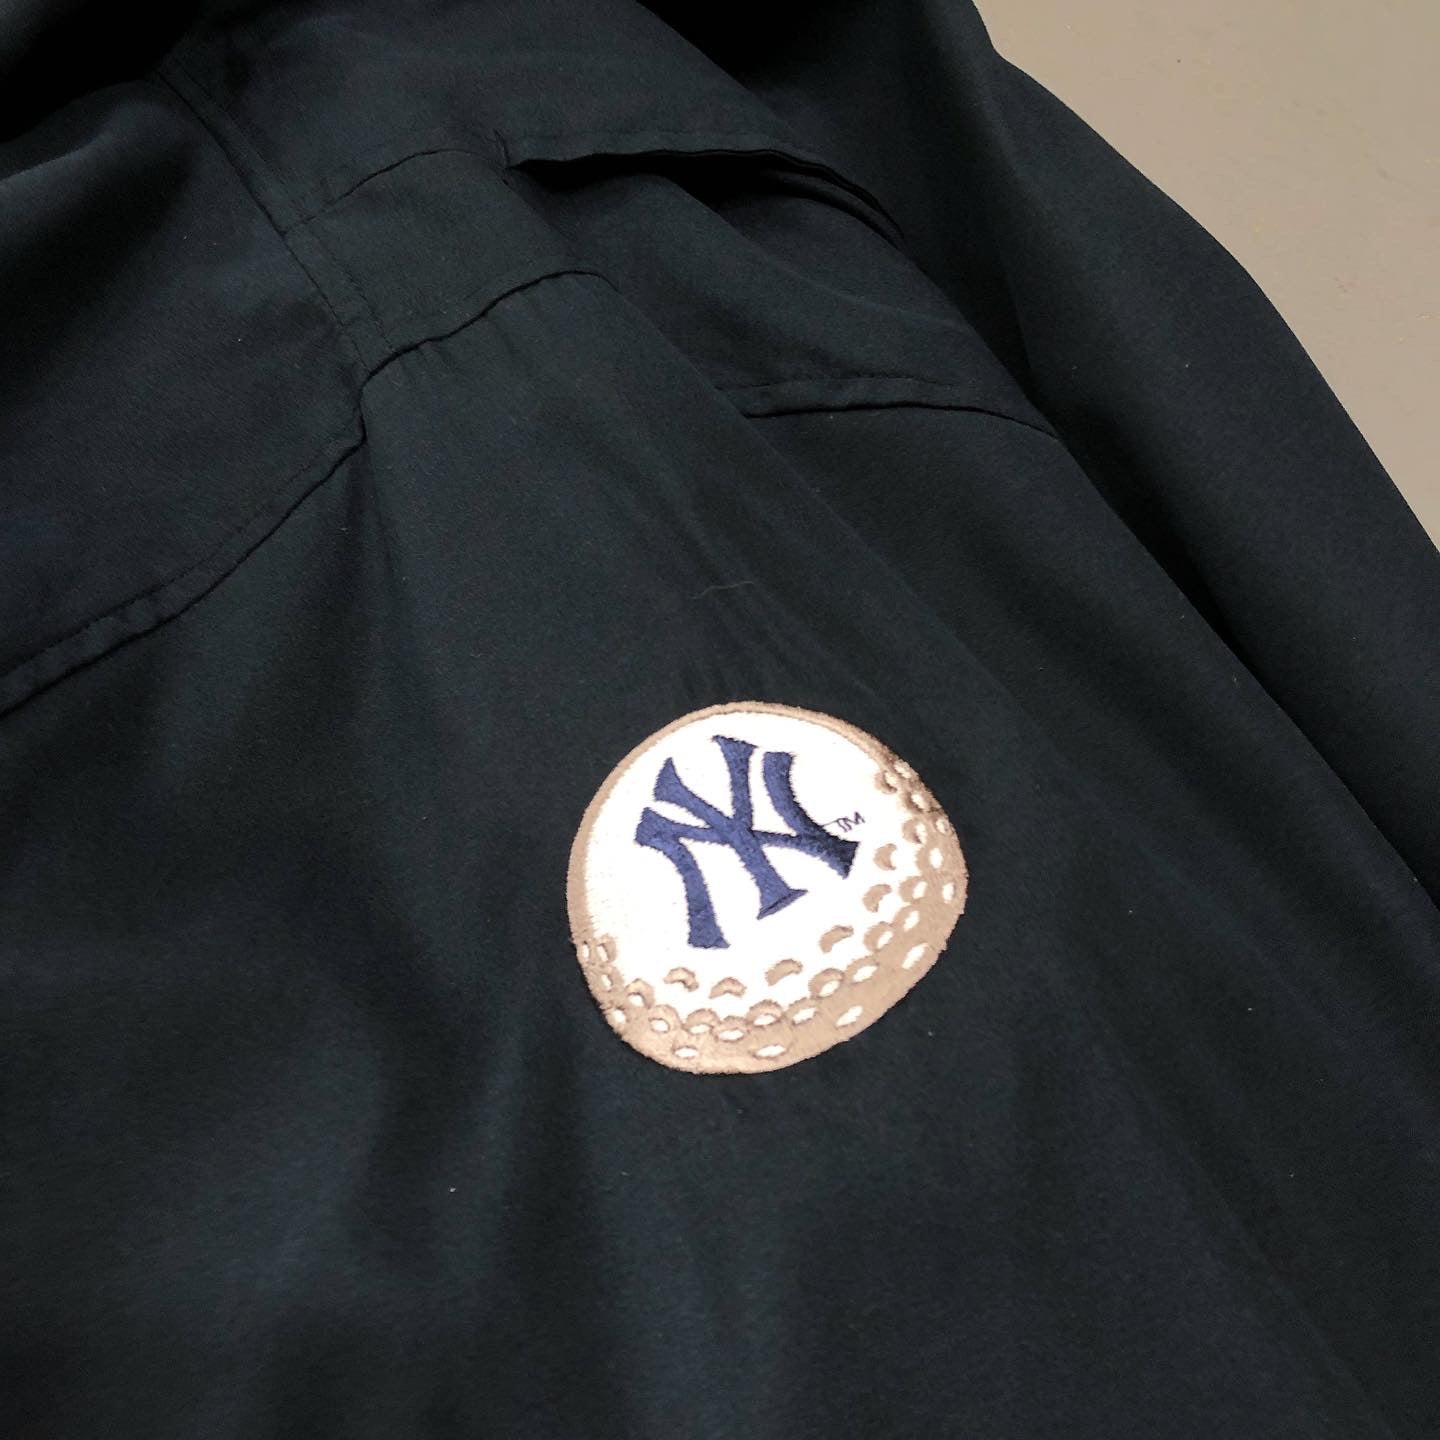 NAUTICA x New York Yankees Customized Swing Top Jacket